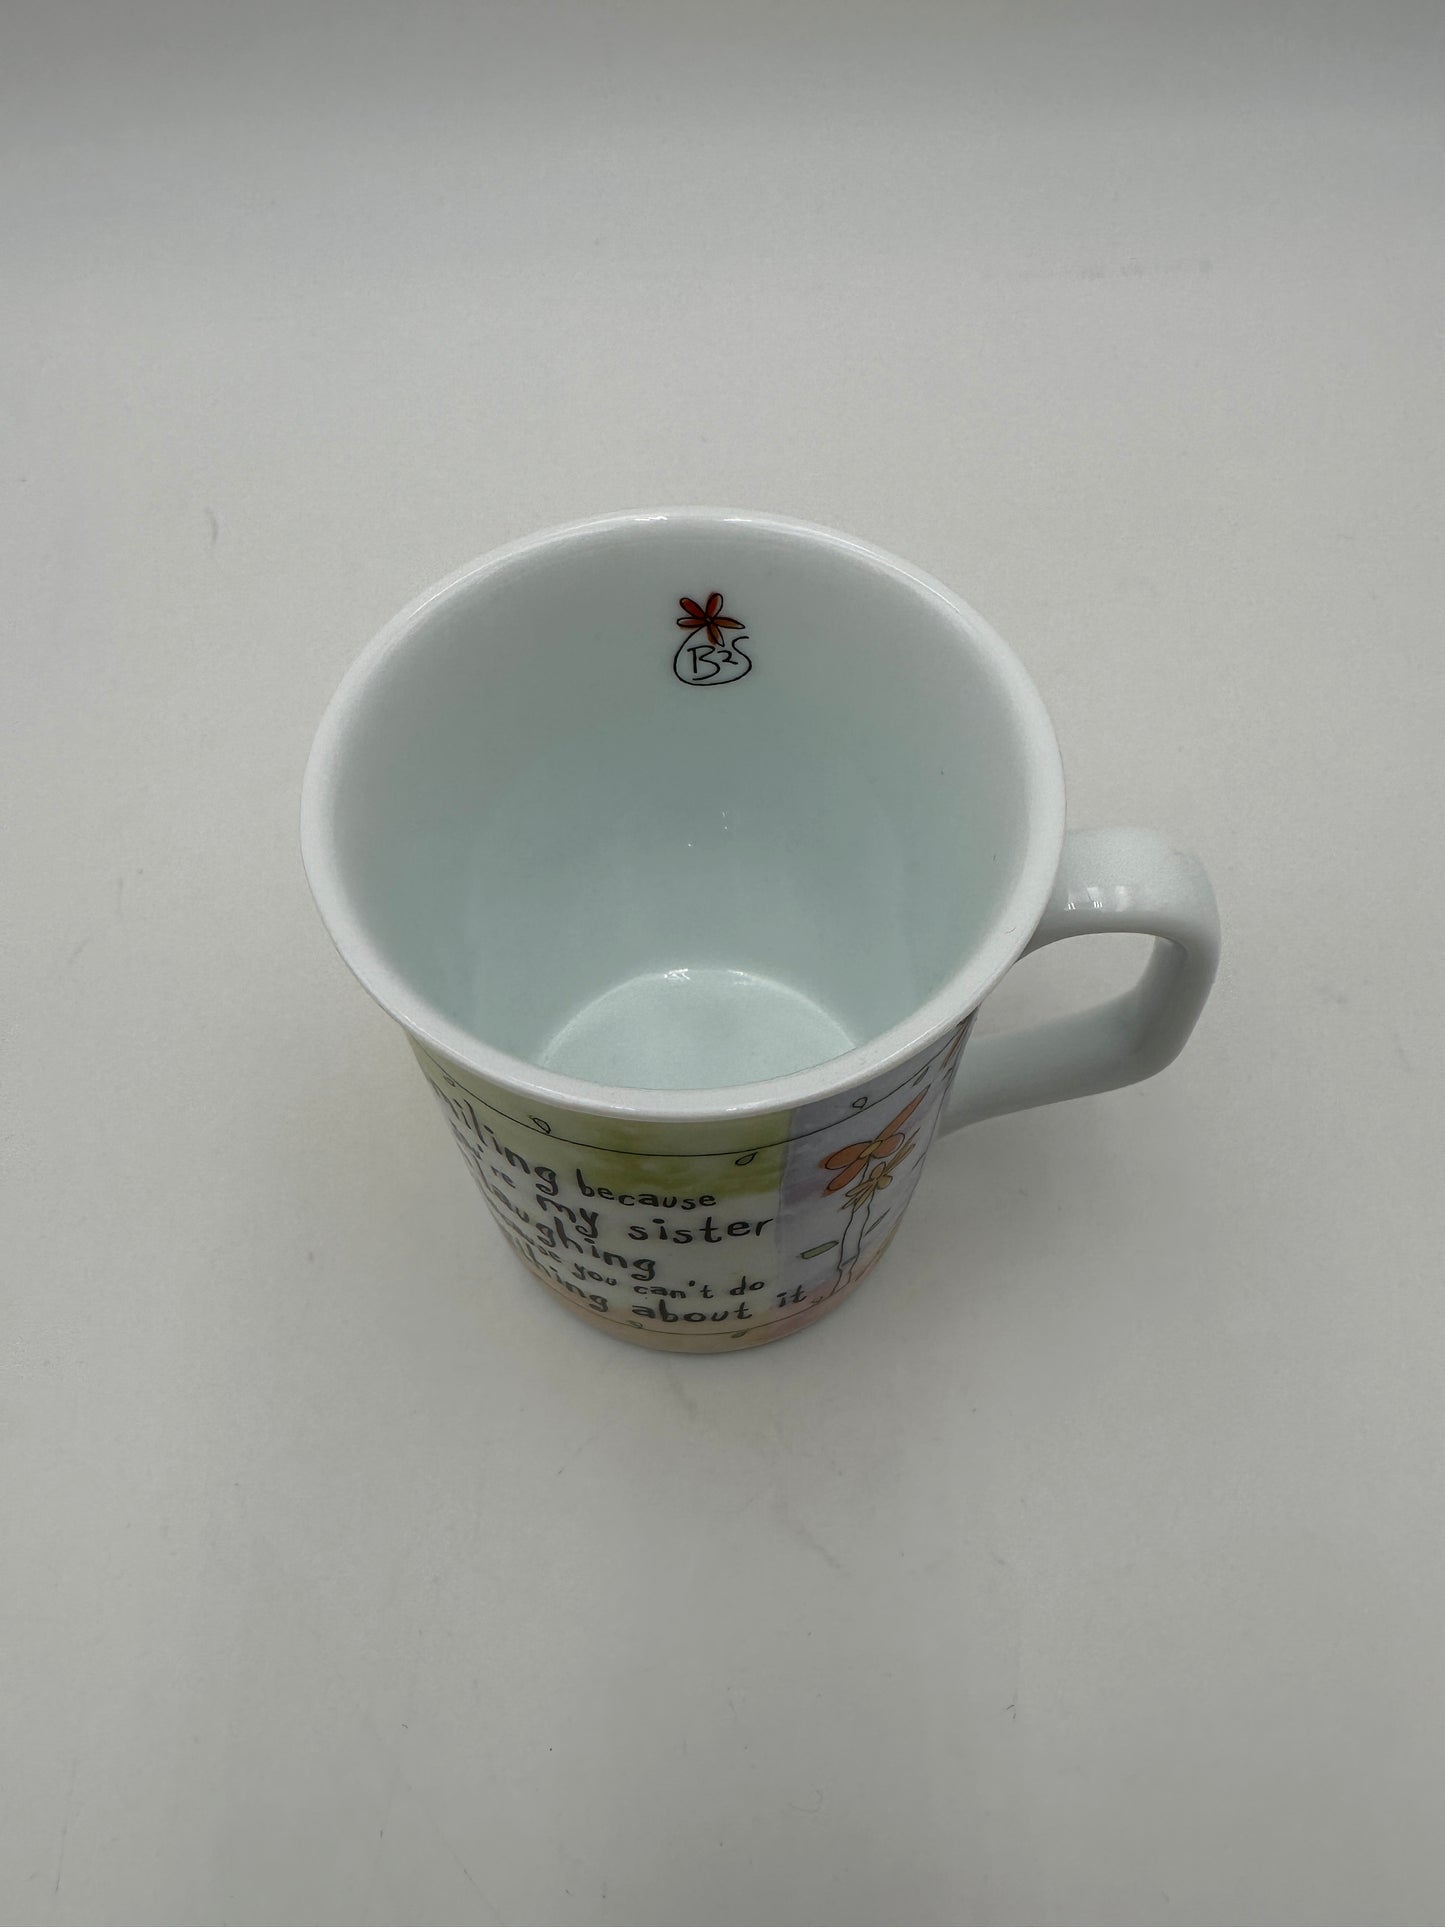 H&H History & Heraldry Humorous Sister Cup Mug, EUC